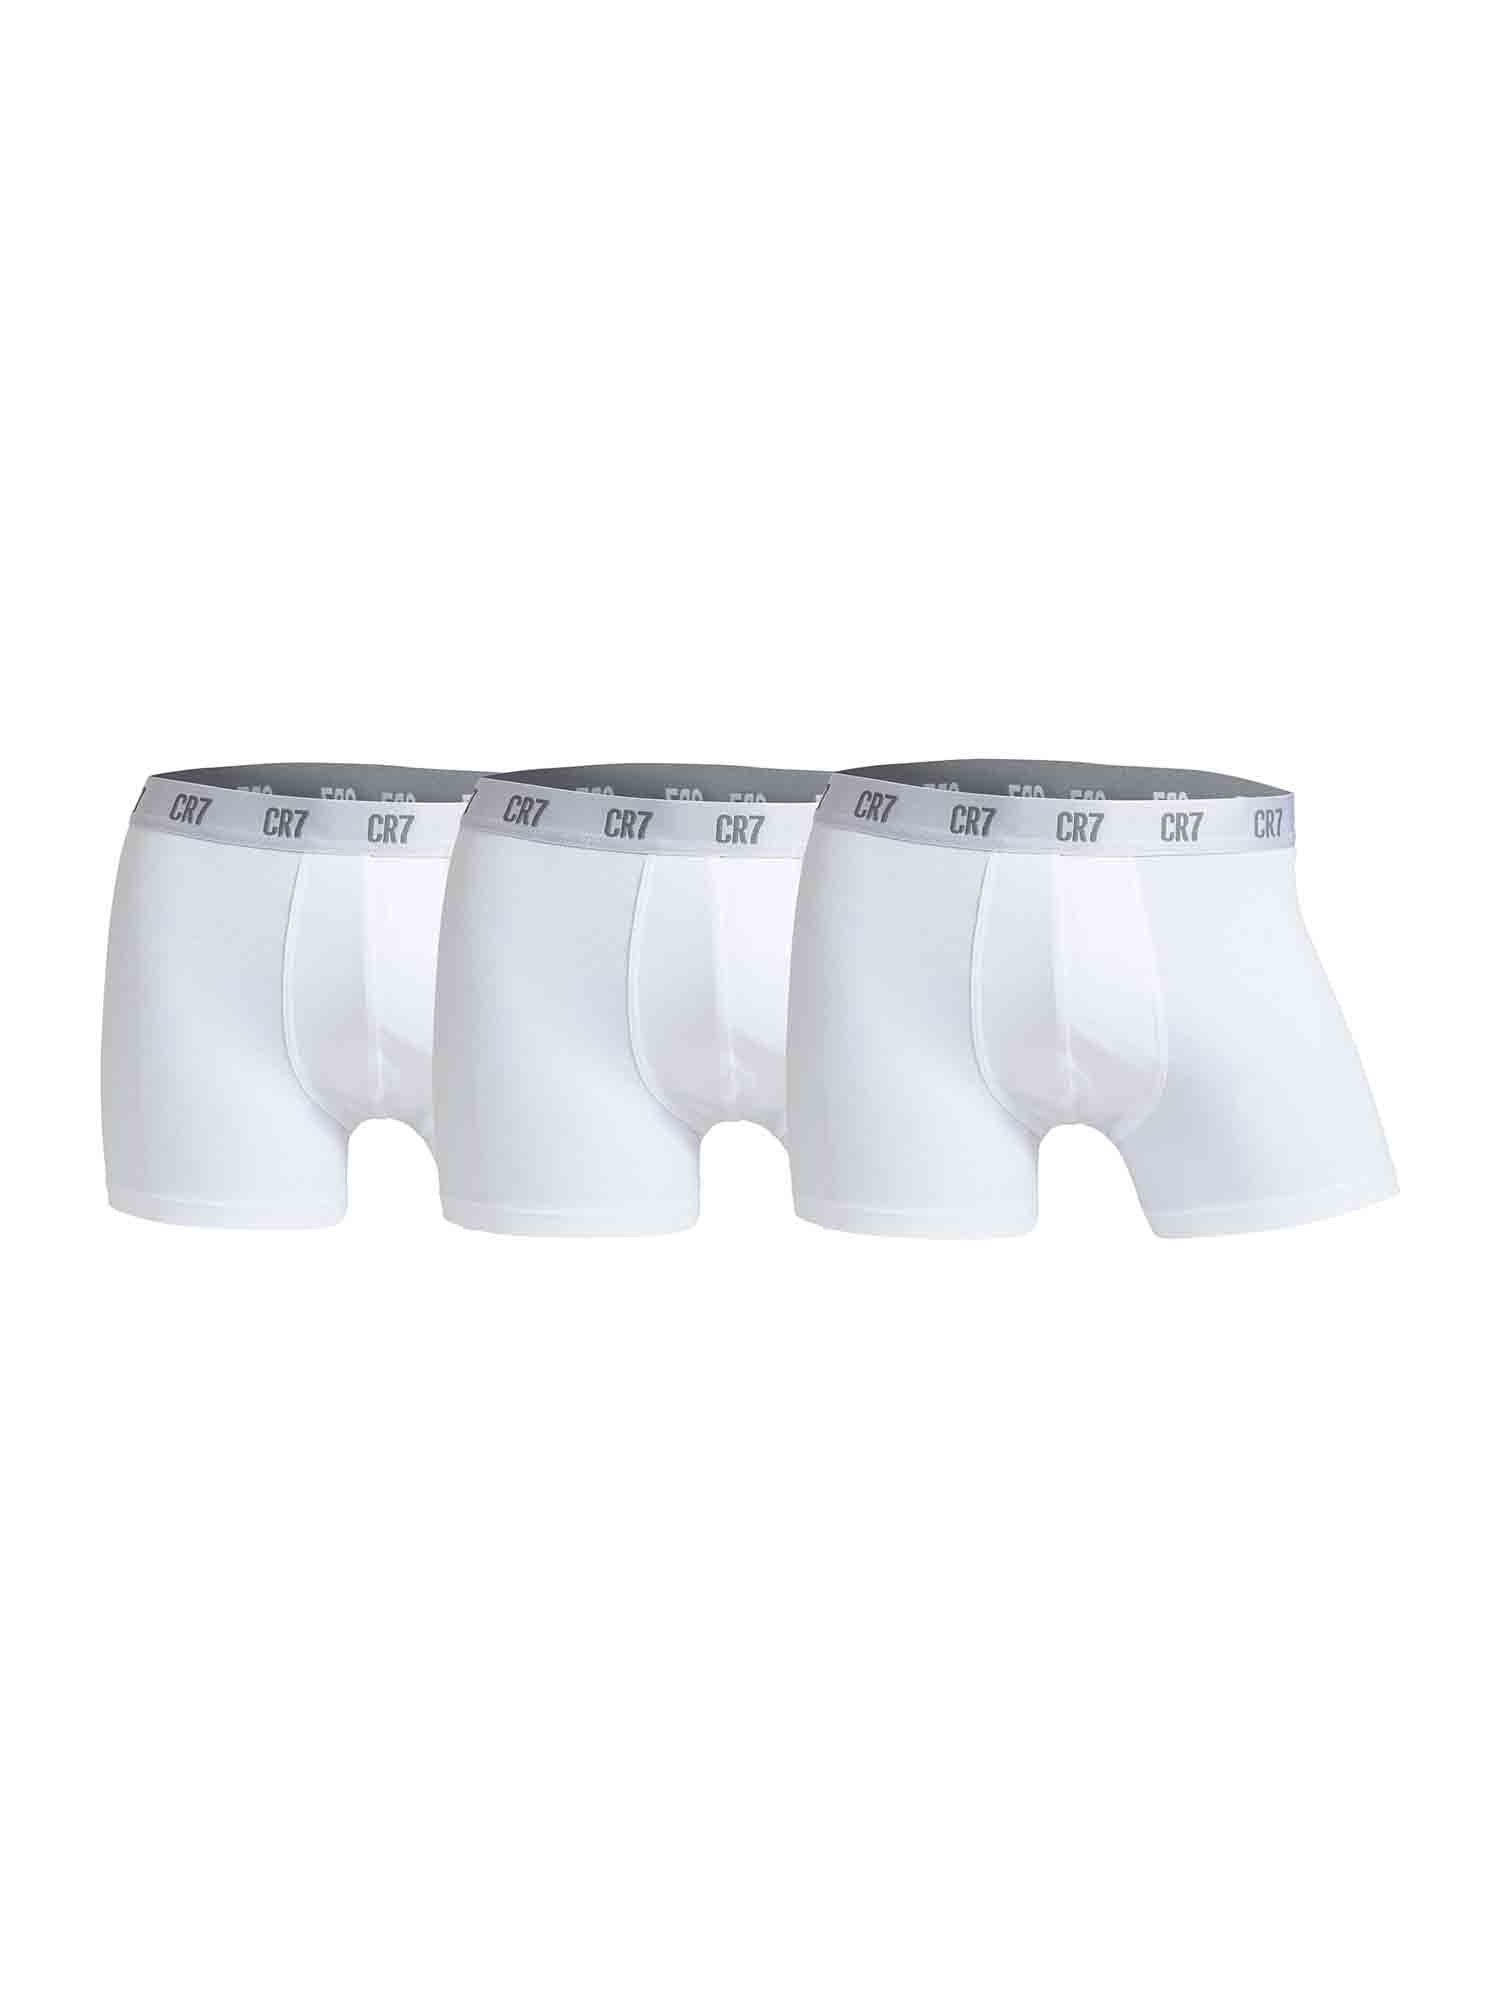 CR7 Retro Pants Herren Männer Boxershorts Retro Pants Trunks Multipack (3-St) Multi 1 | Unterhosen